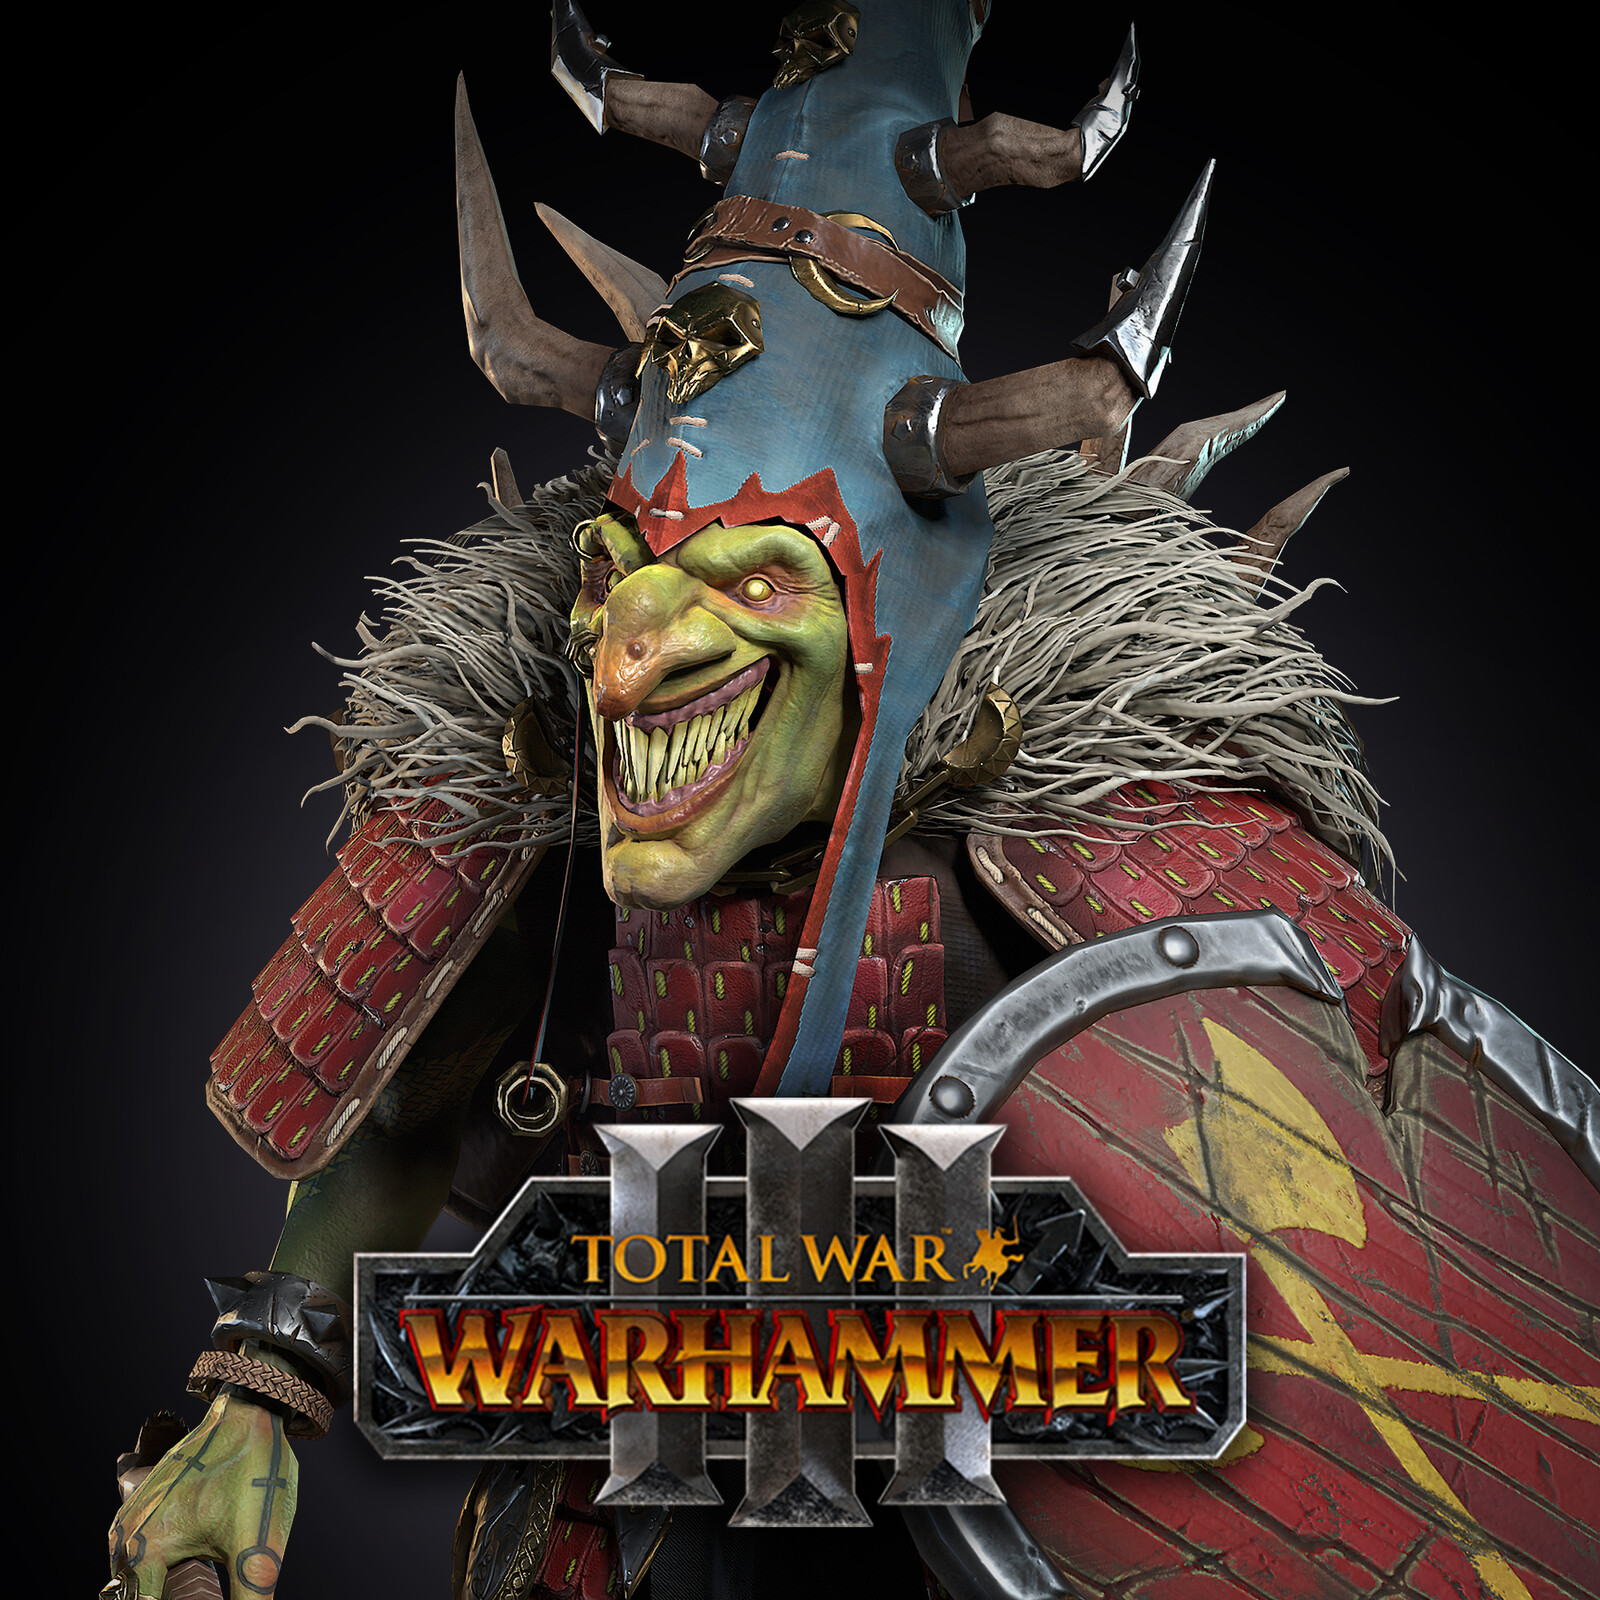 Gorduz - Total War: Warhammer III - Forge of the Chaos Dwarfs DLC